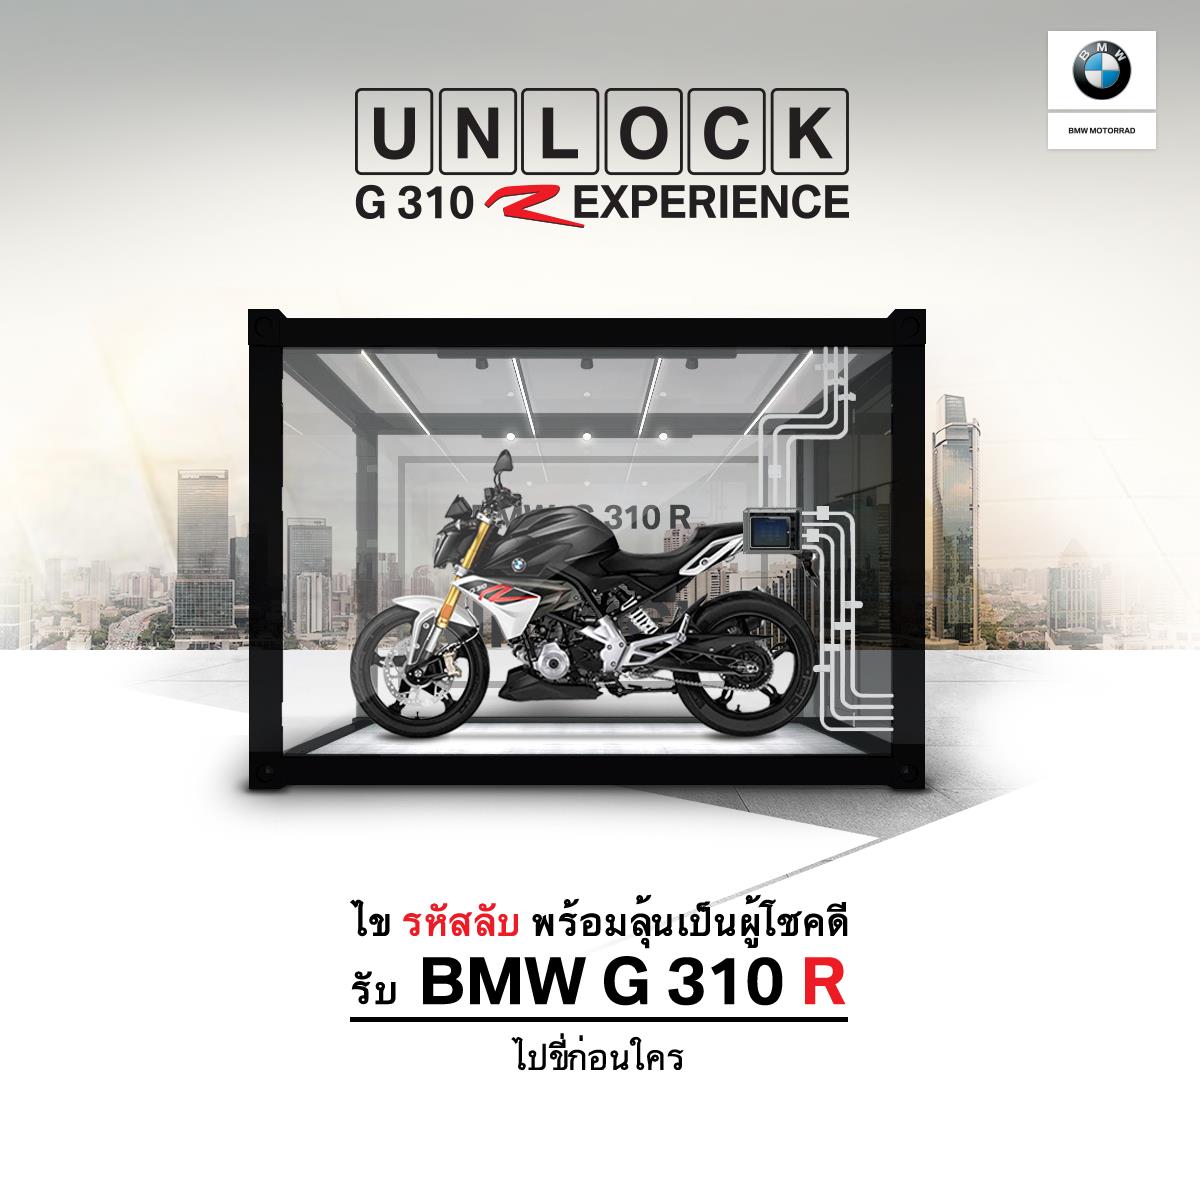 Unlock G310 R Experience